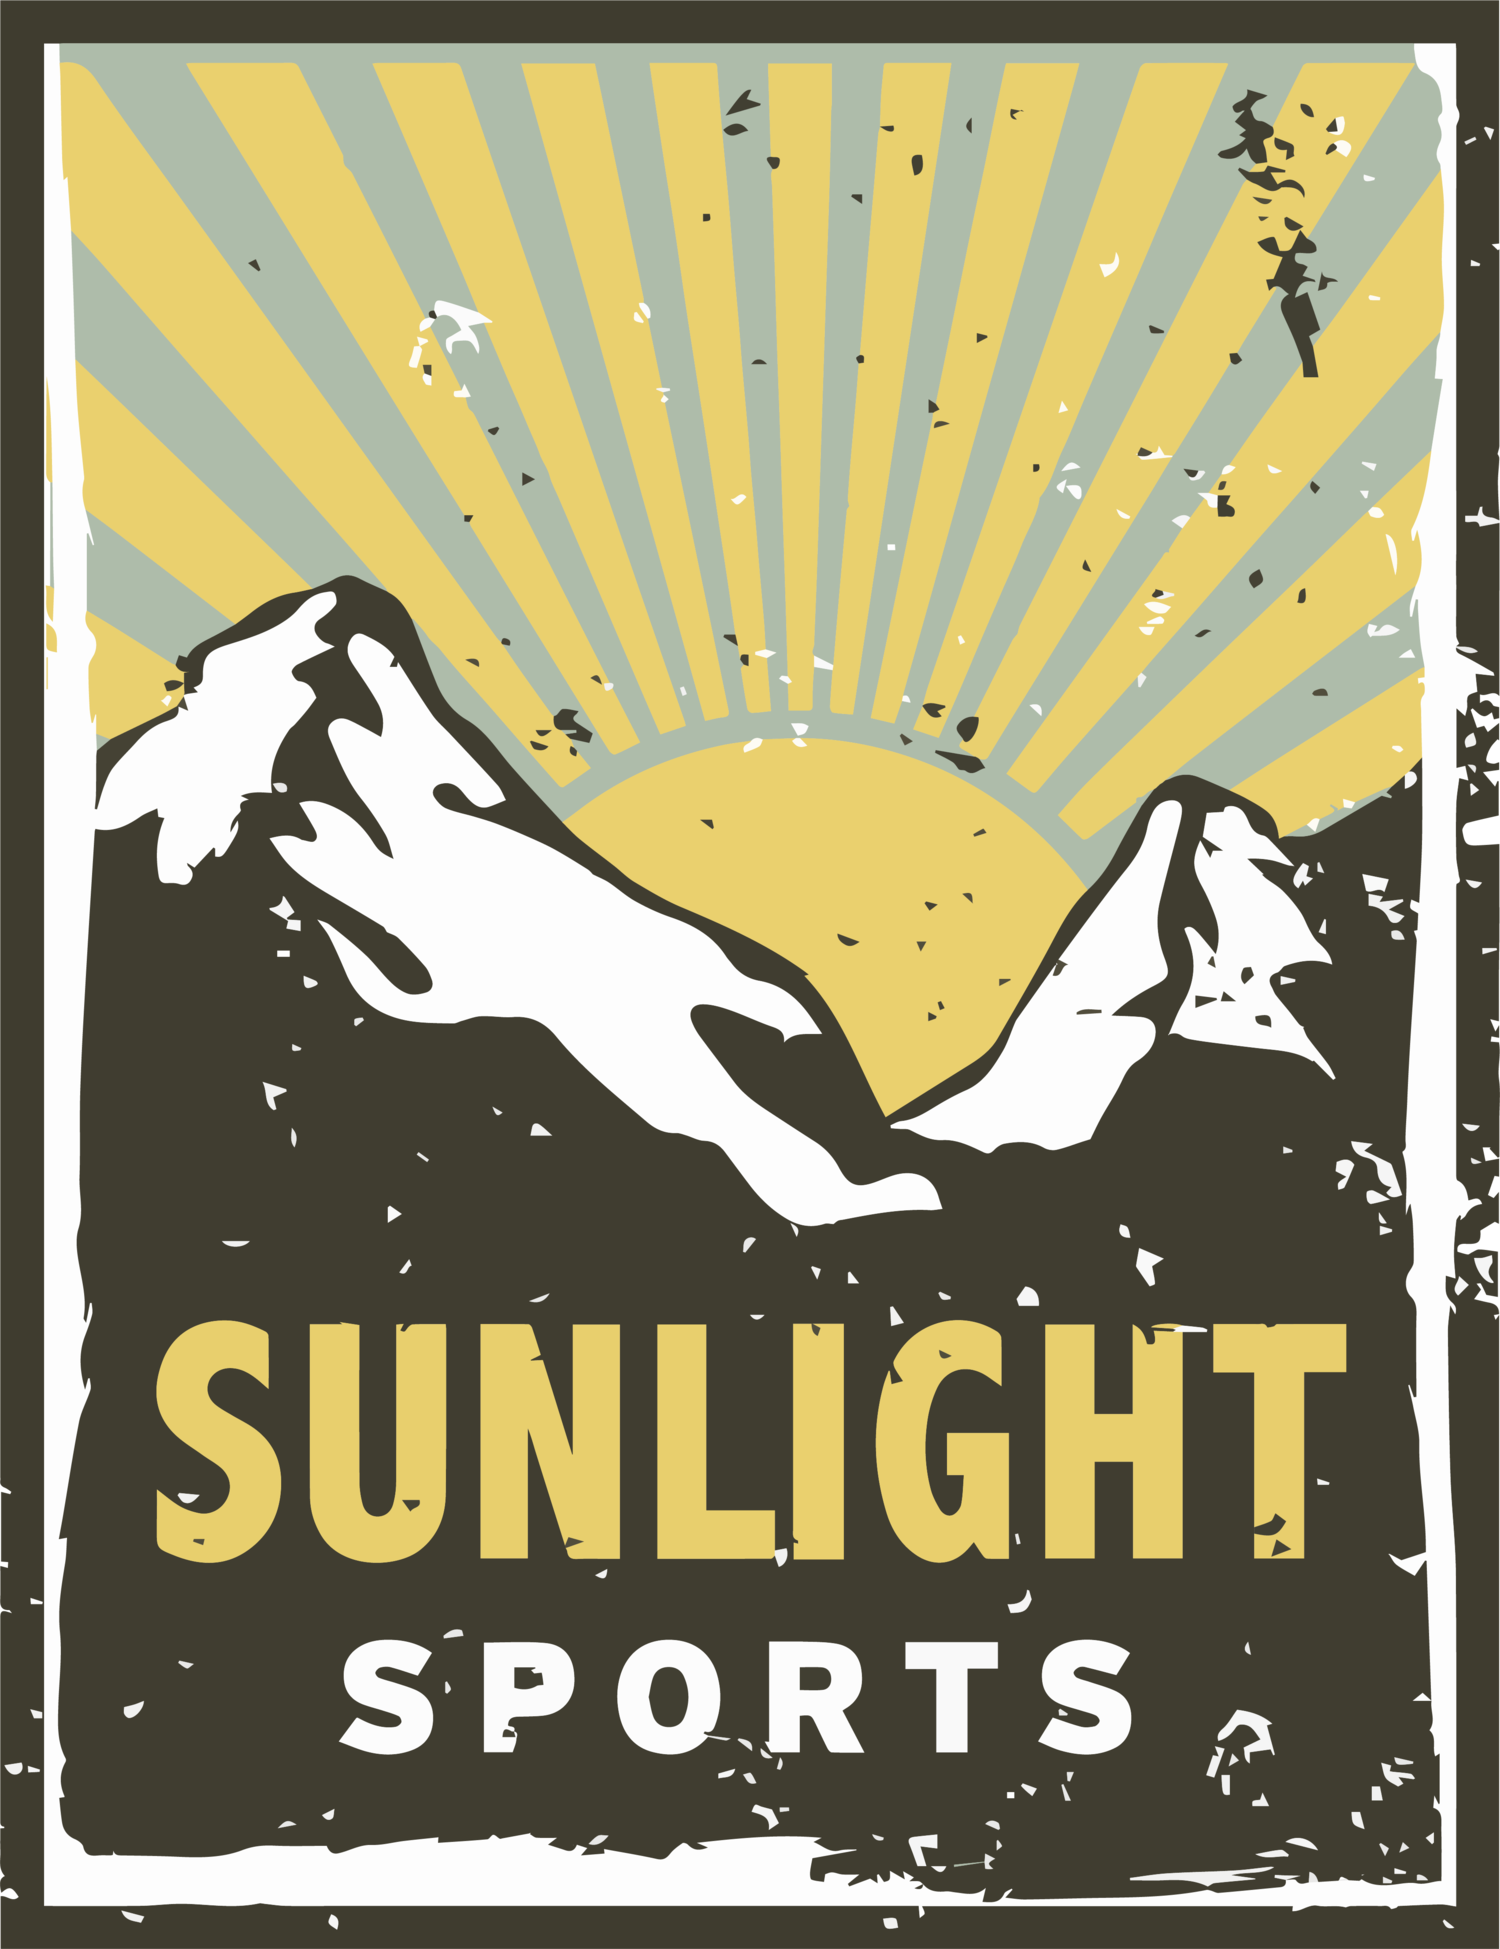 Sunlight Sports